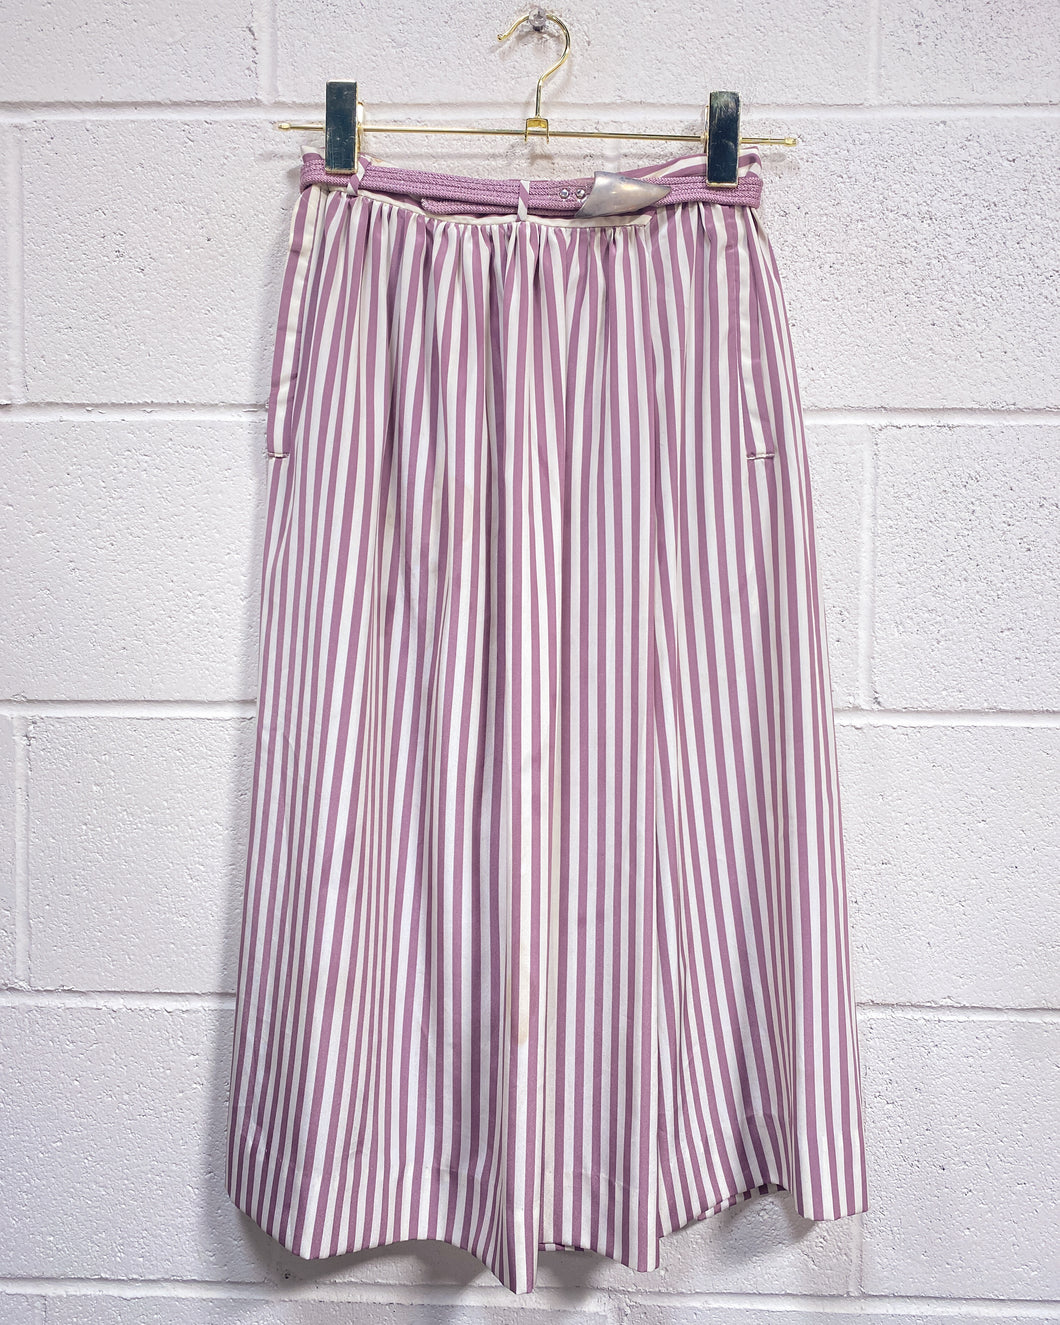 Vintage Lavender and White Skirt with Belt (5/6)